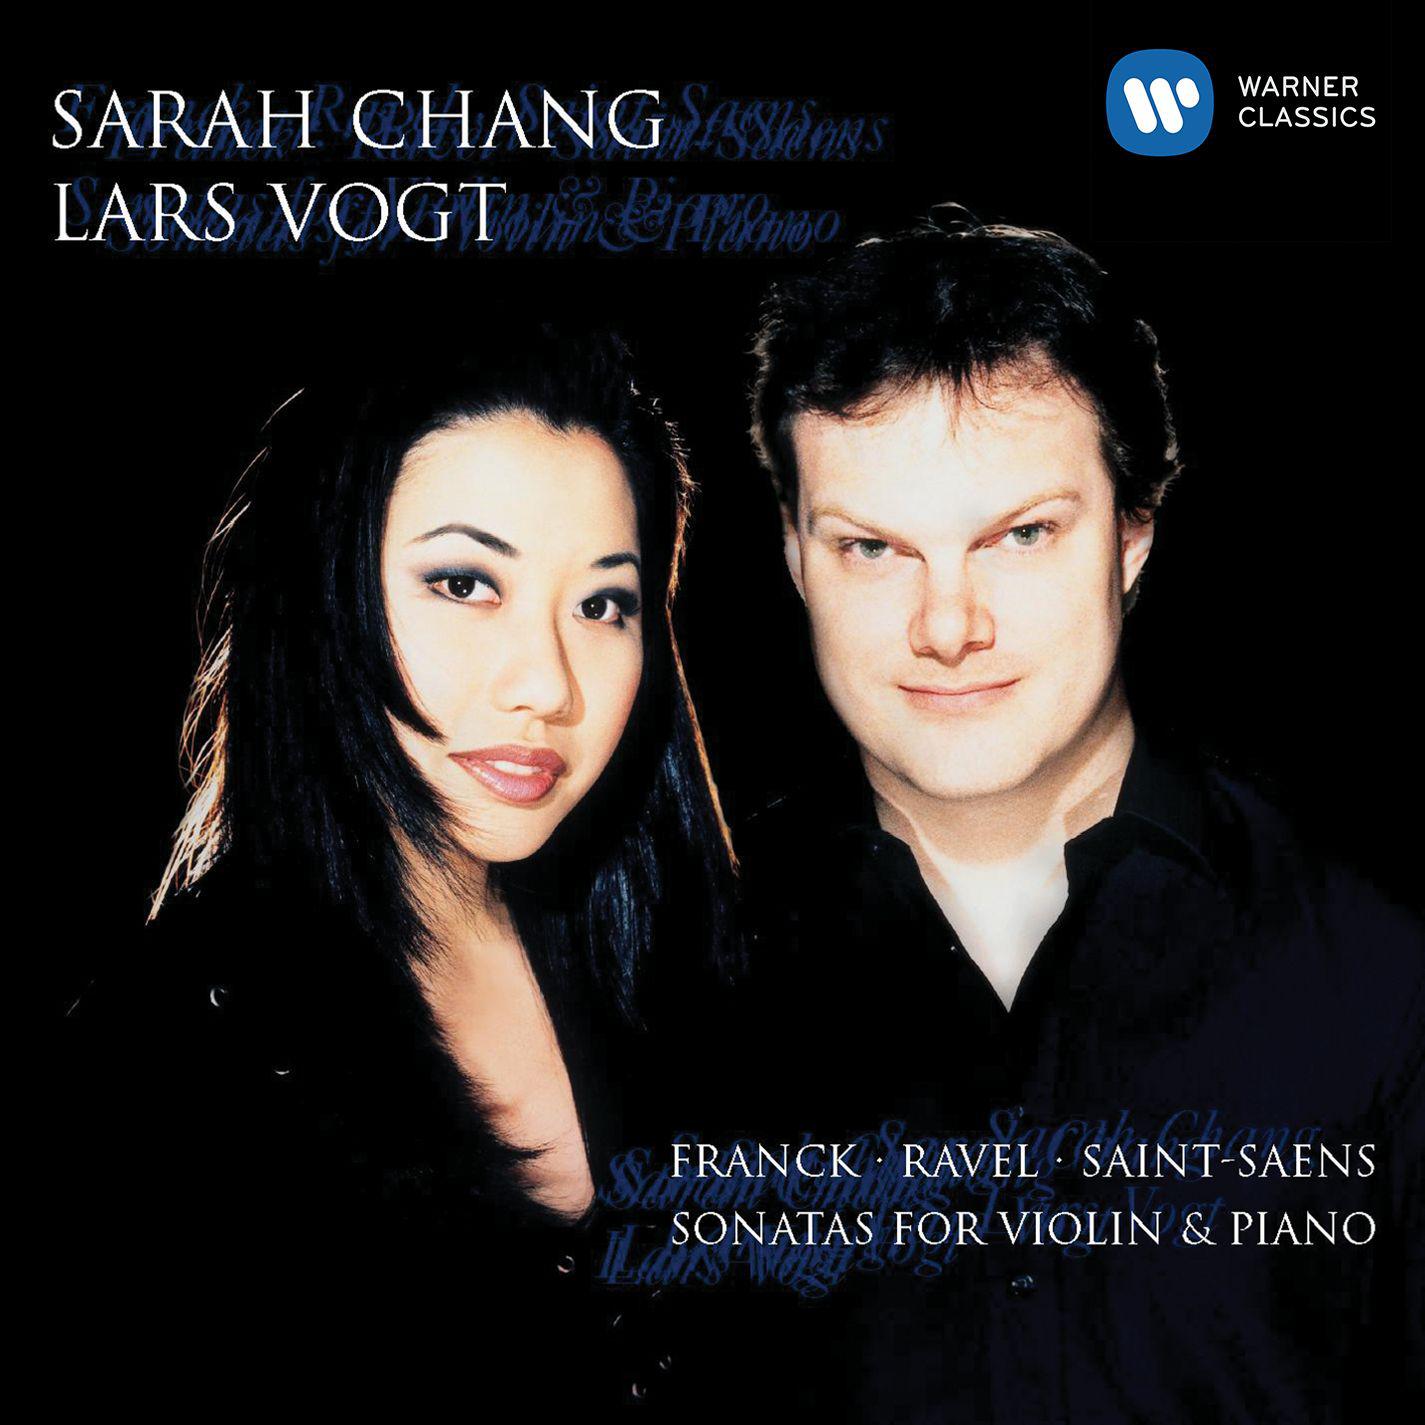 Franck, Ravel & Saint-Saens: Sonatas for Violin & Piano